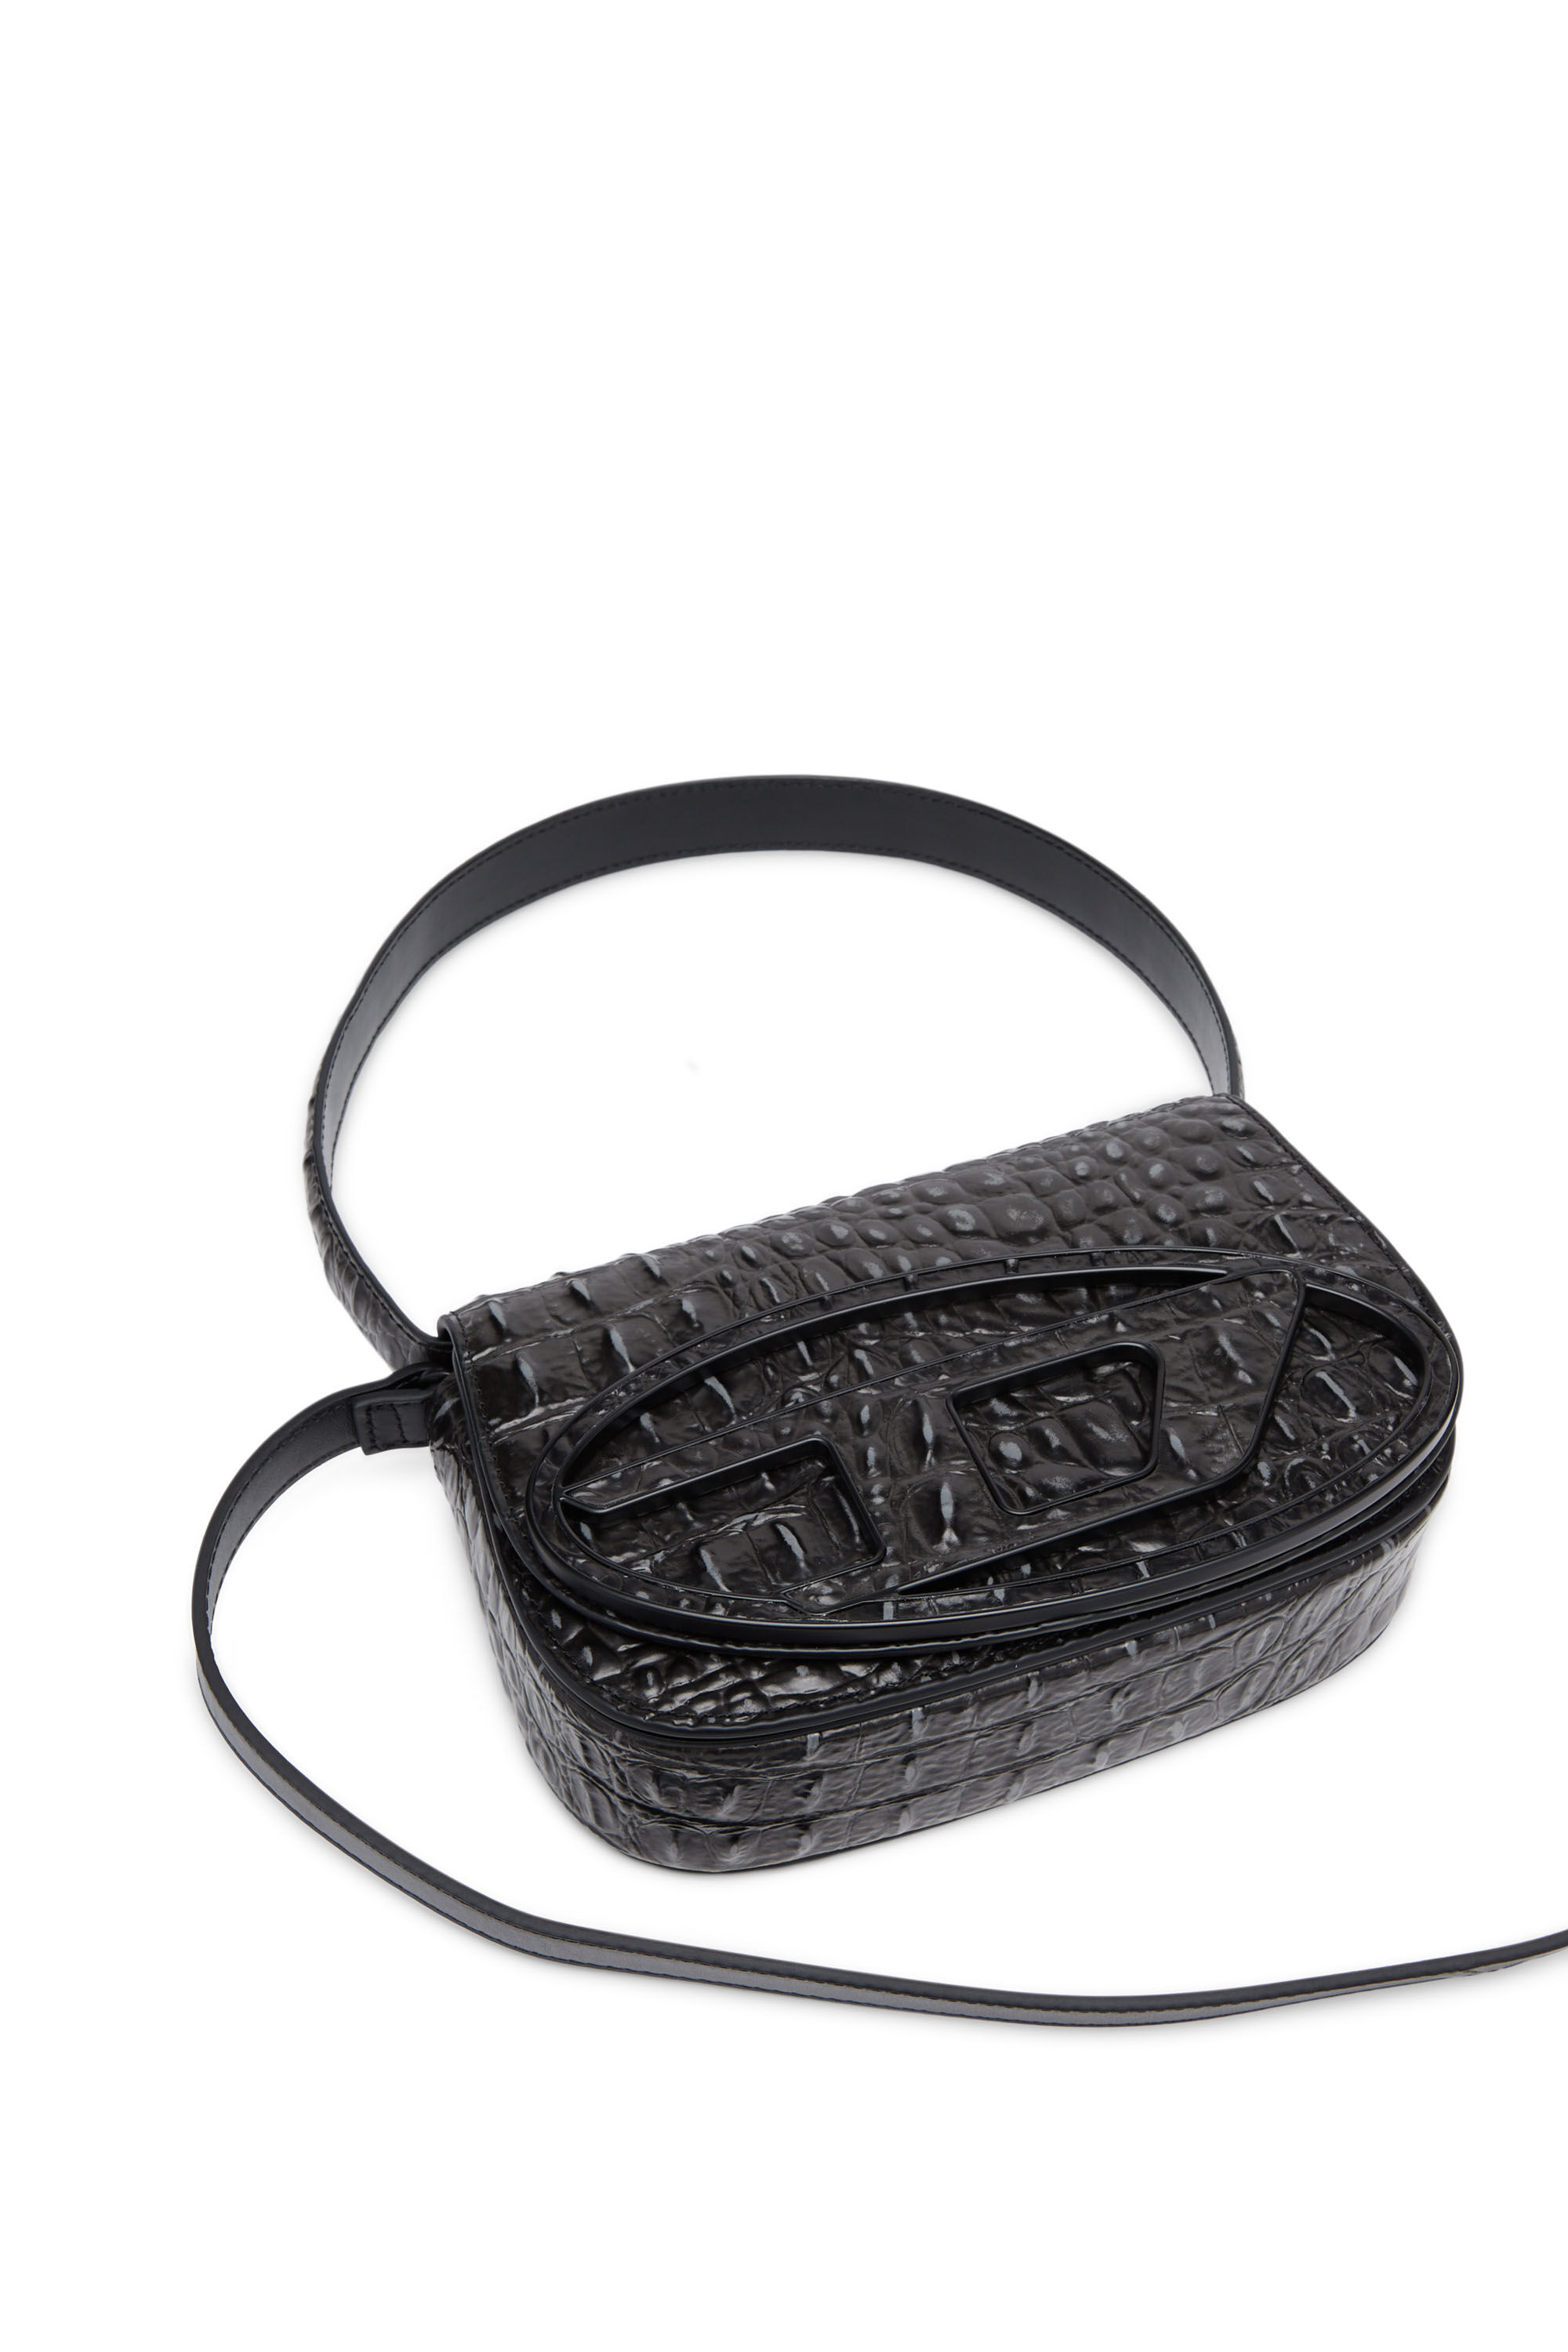 Professional Case - Leather Specialist Doctor Bag - Medium (14 x 5 x 8)  - Black - Crocodile Print